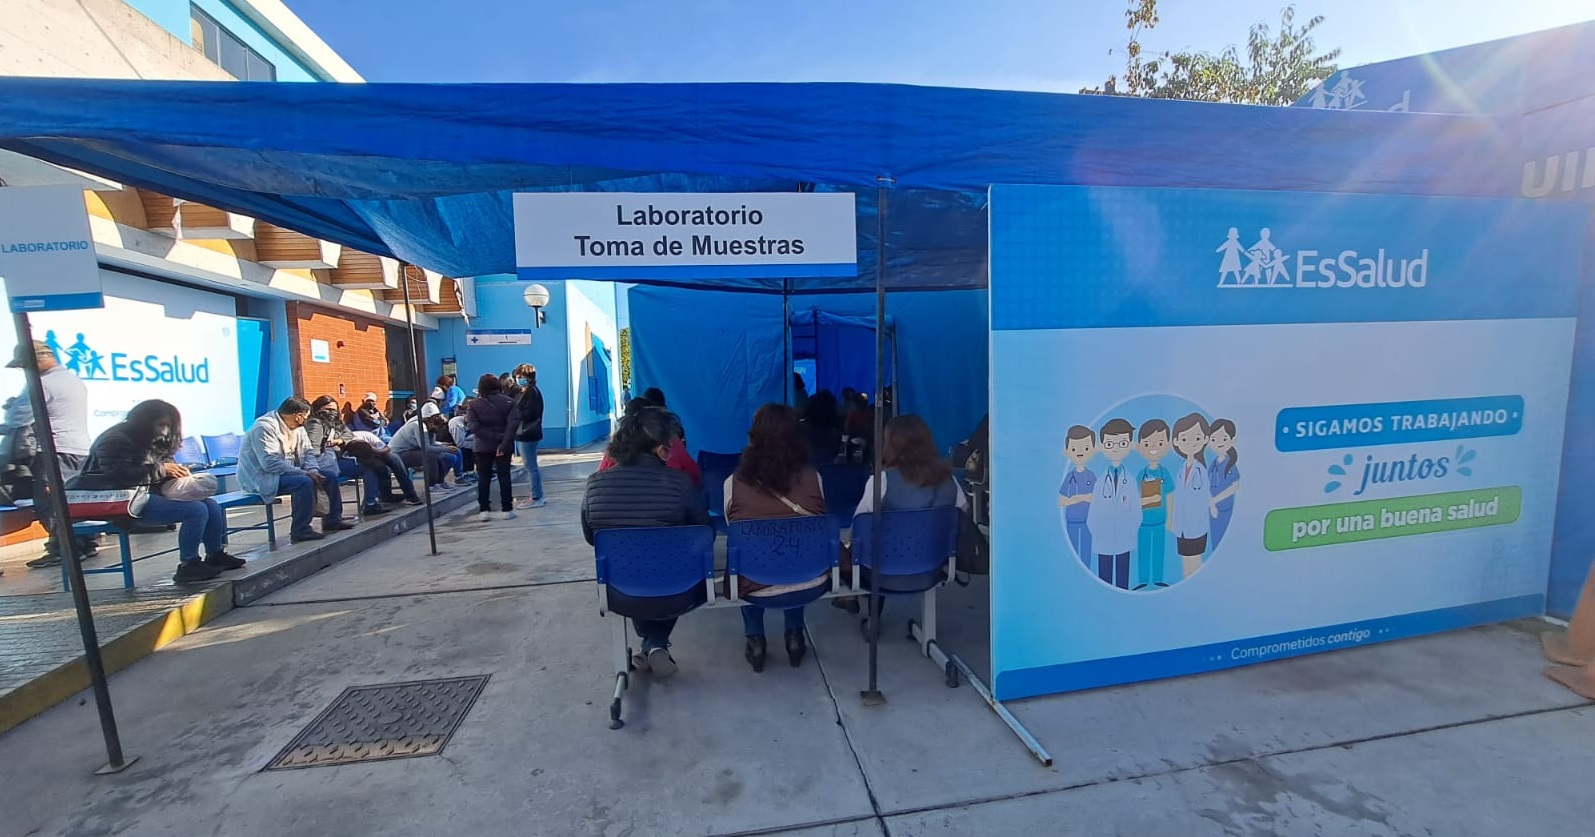 Essalud - EsSalud Arequipa: Servicio de Laboratorio retorna a Hospital III Yanahuara